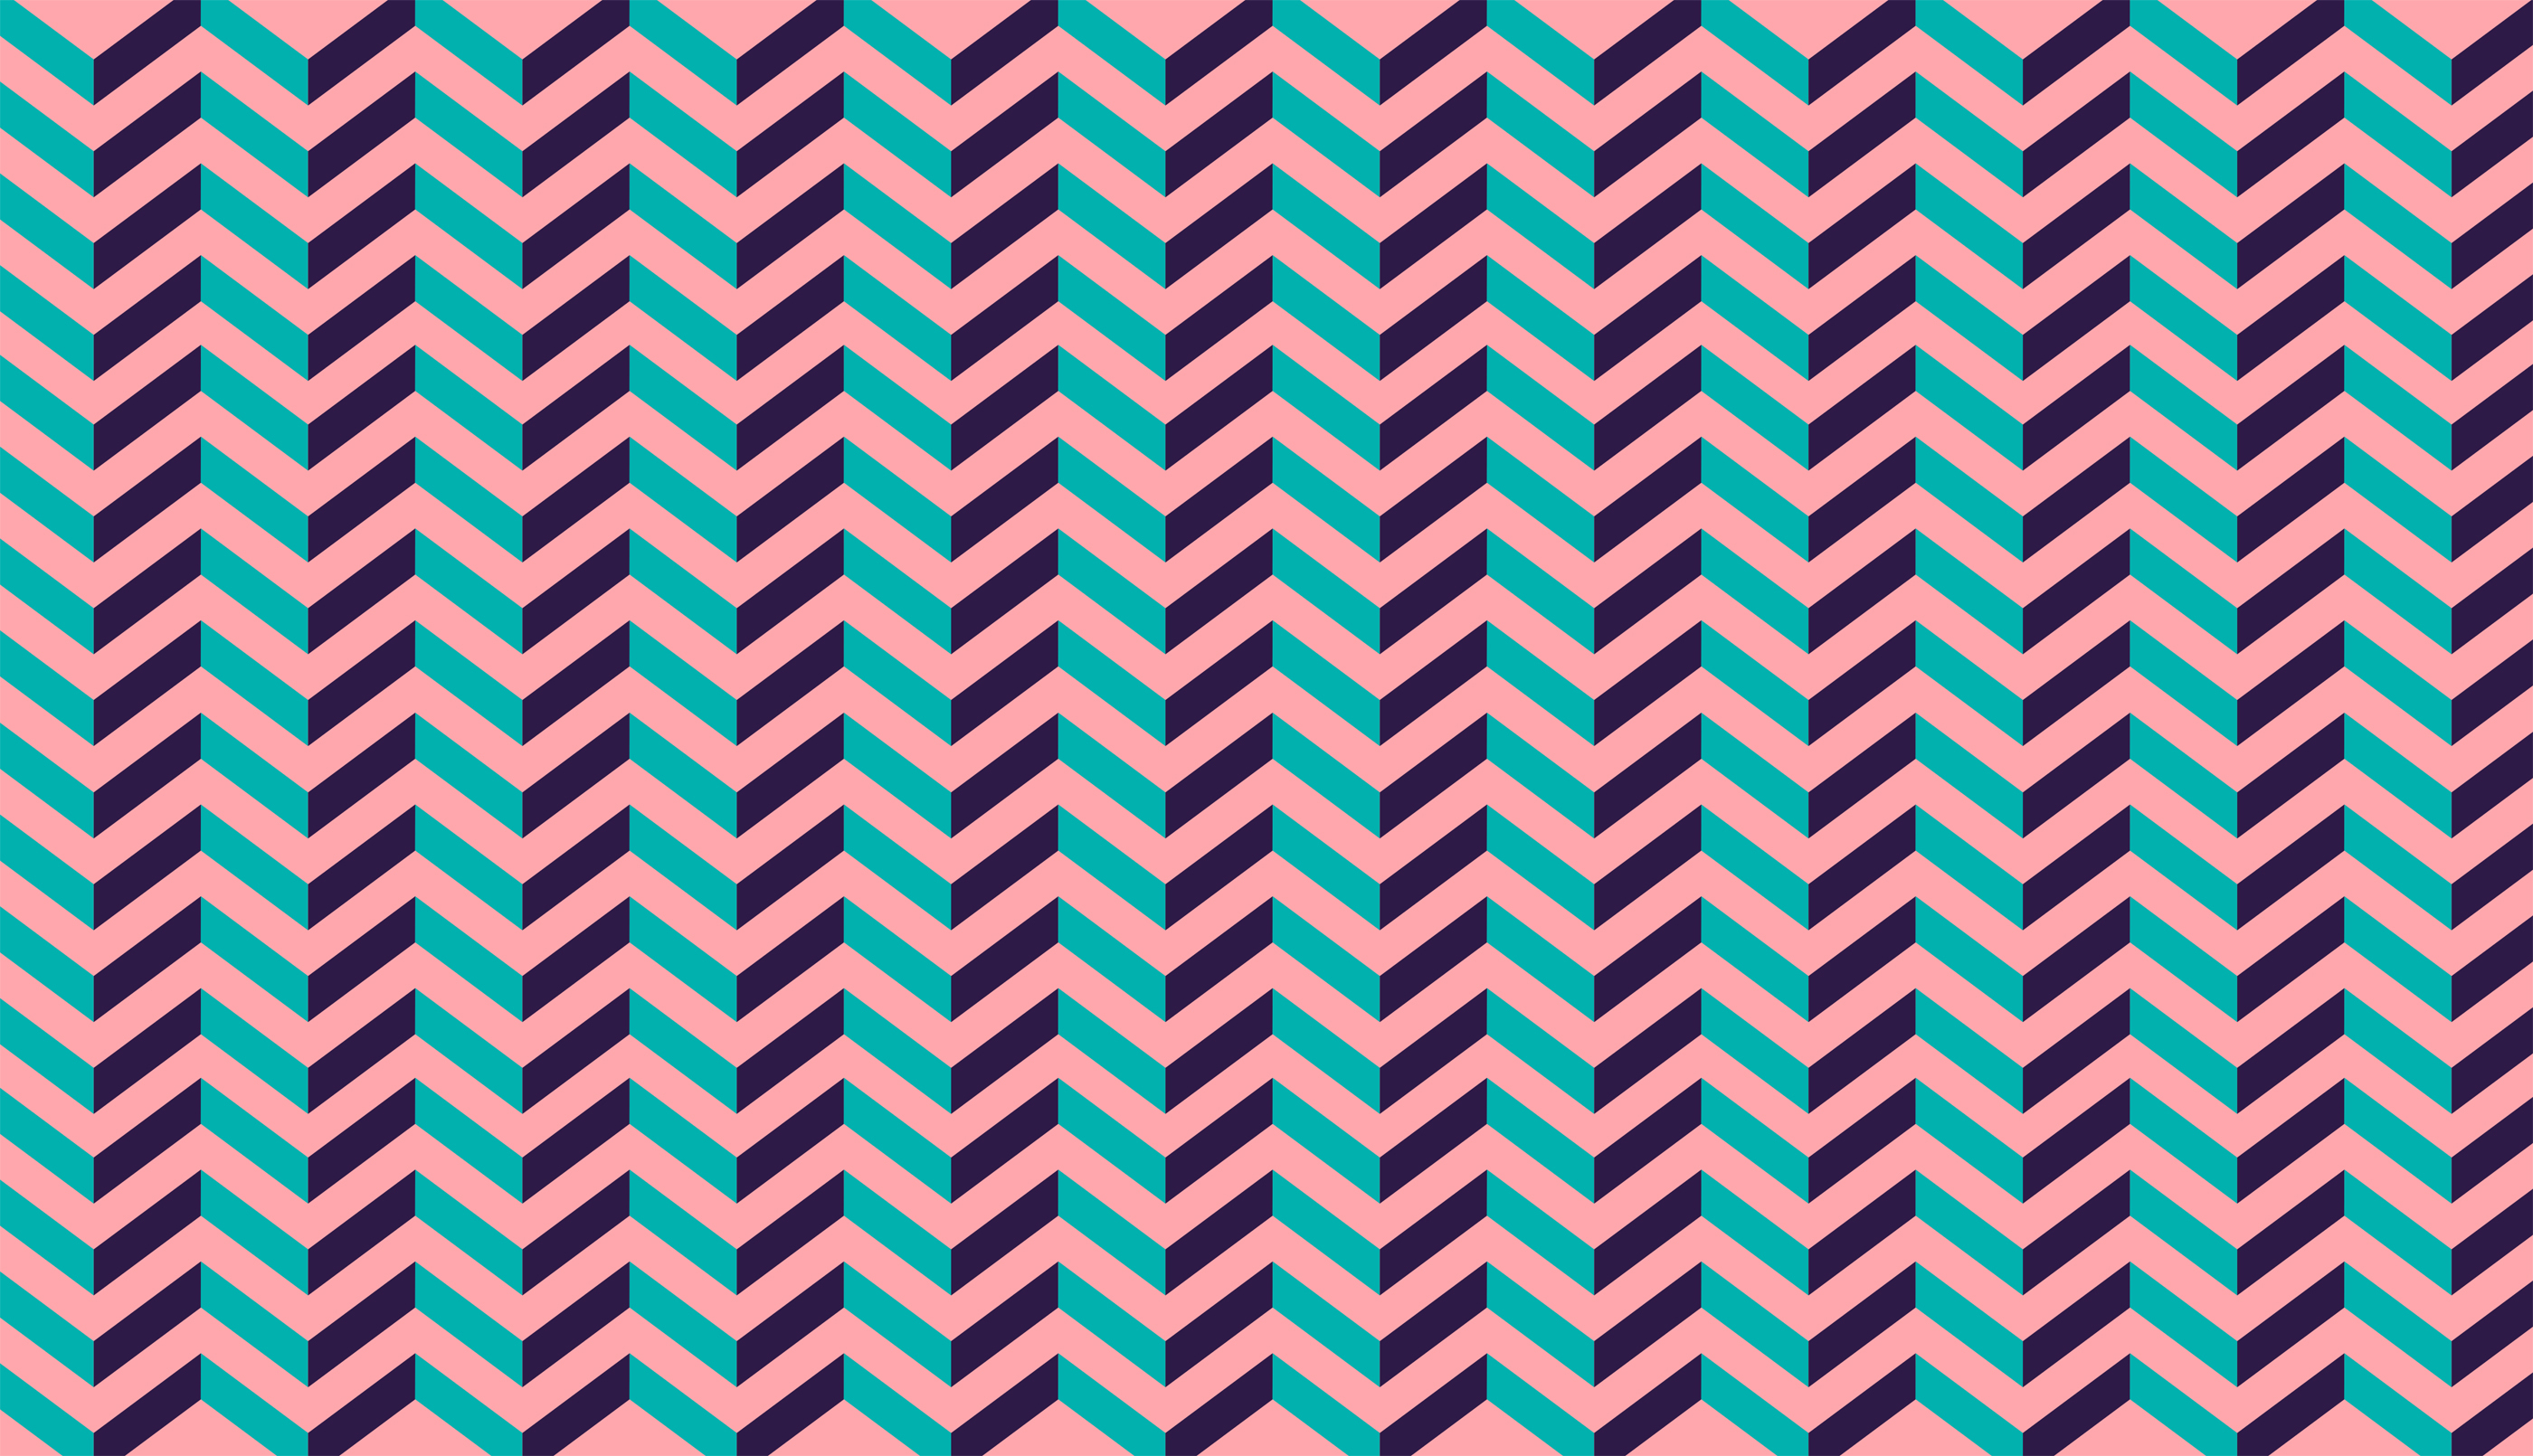 Pattern - Optic Illusions, Abstract, Squared, Rectangular, Regular, HQ Photo